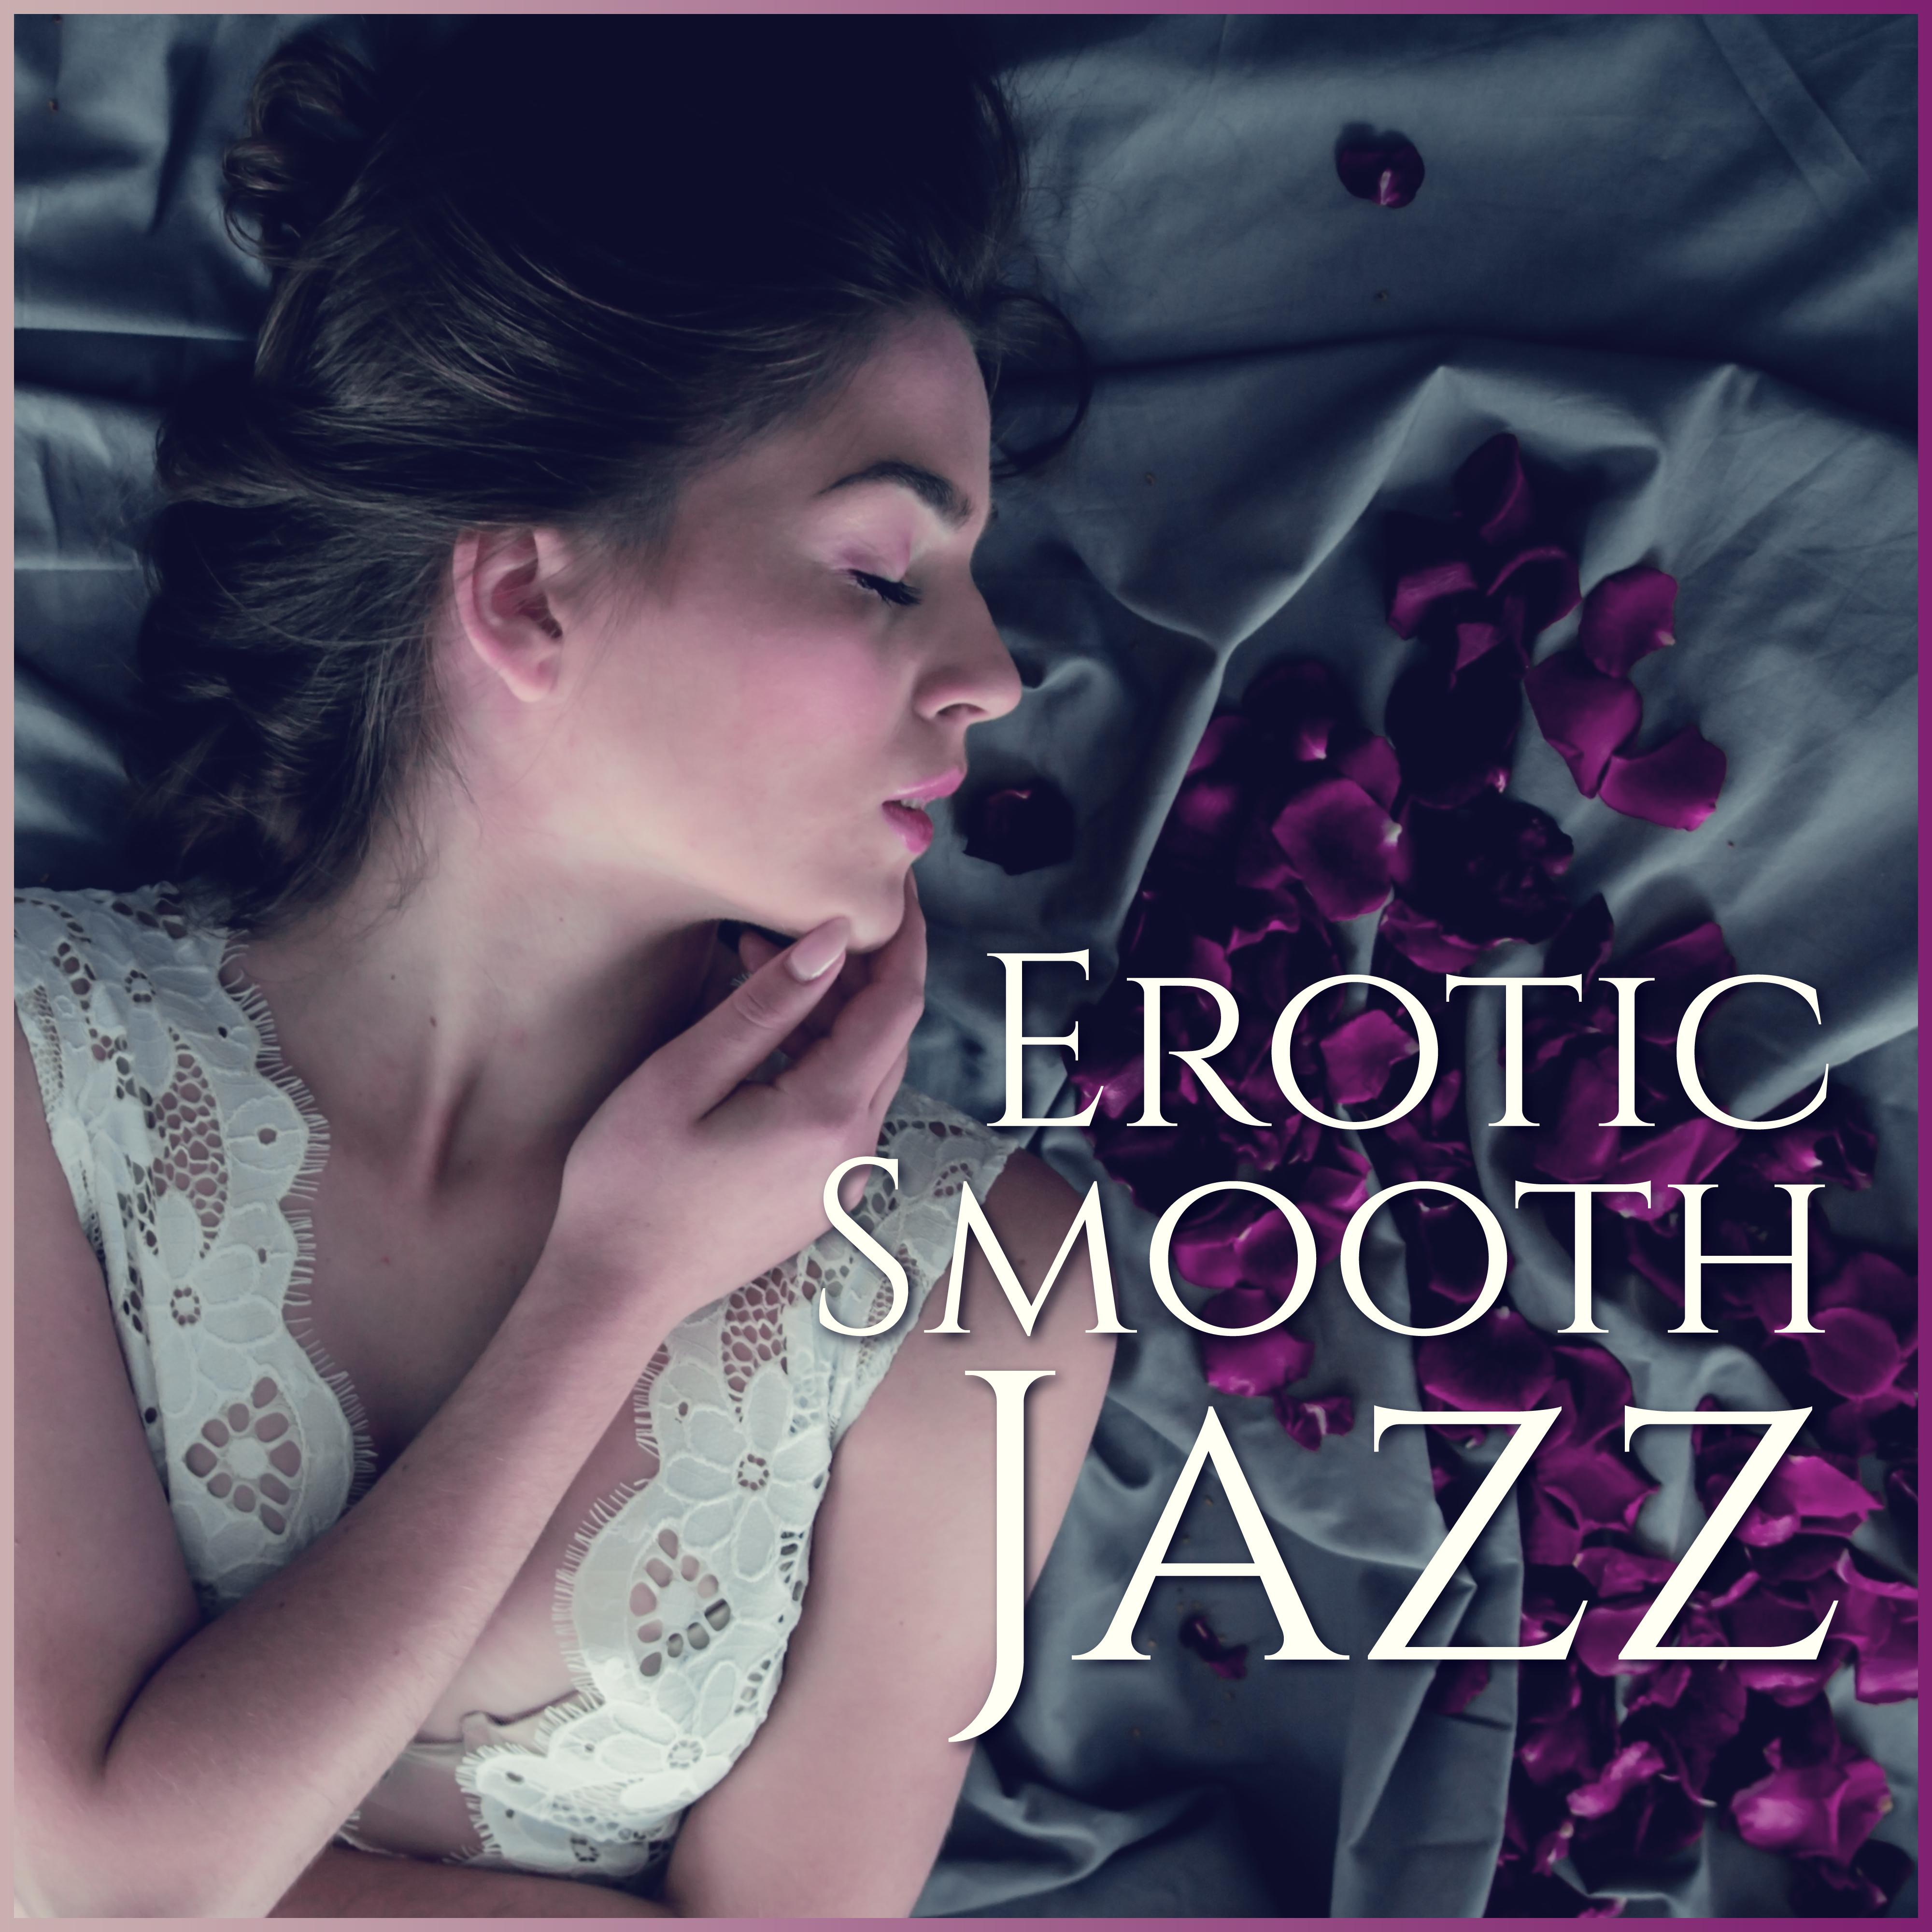 Erotic Smooth Jazz